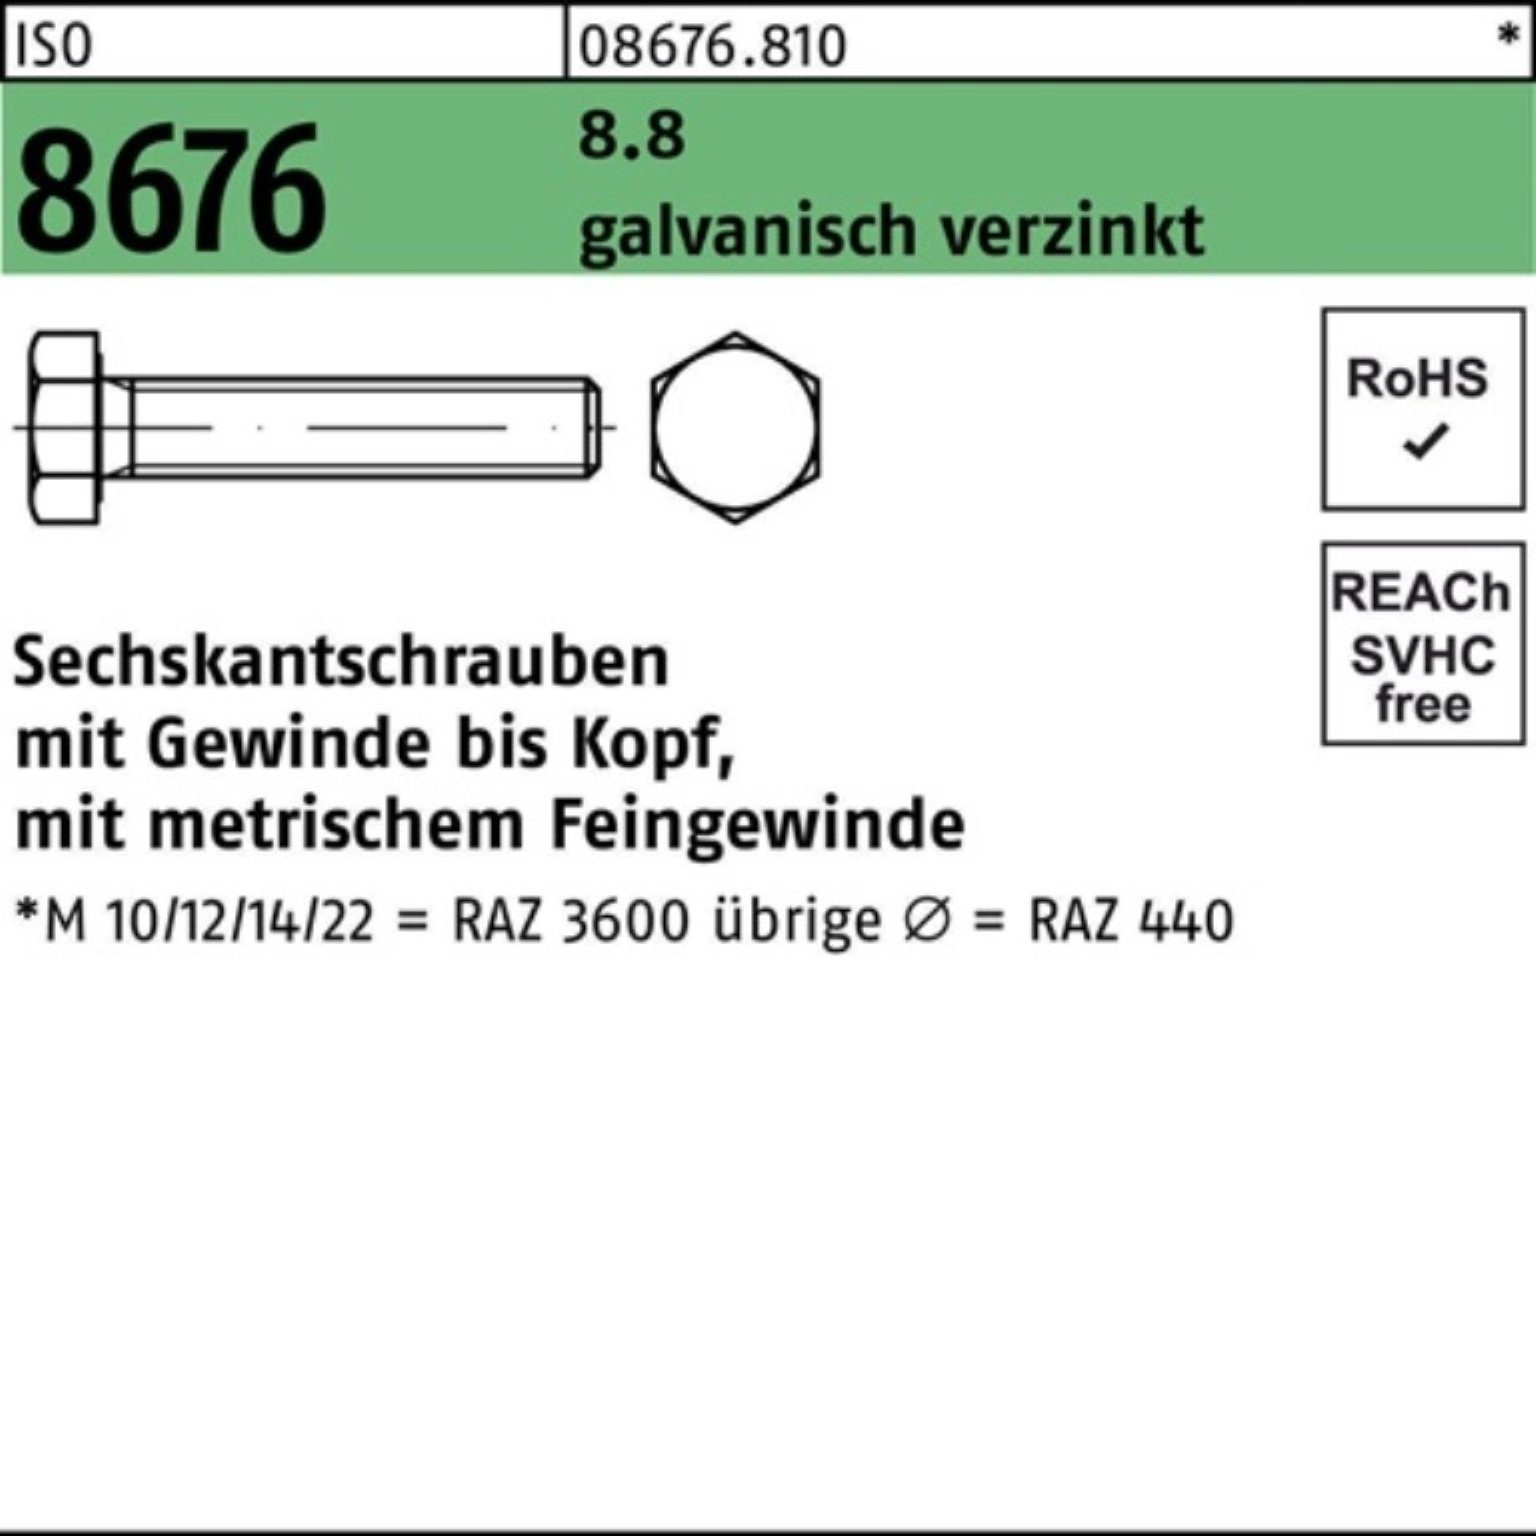 Reyher Sechskantschraube 100er Pack Sechskantschraube VG galv.verz. 40 50 M16x1,5x 8.8 8676 ISO